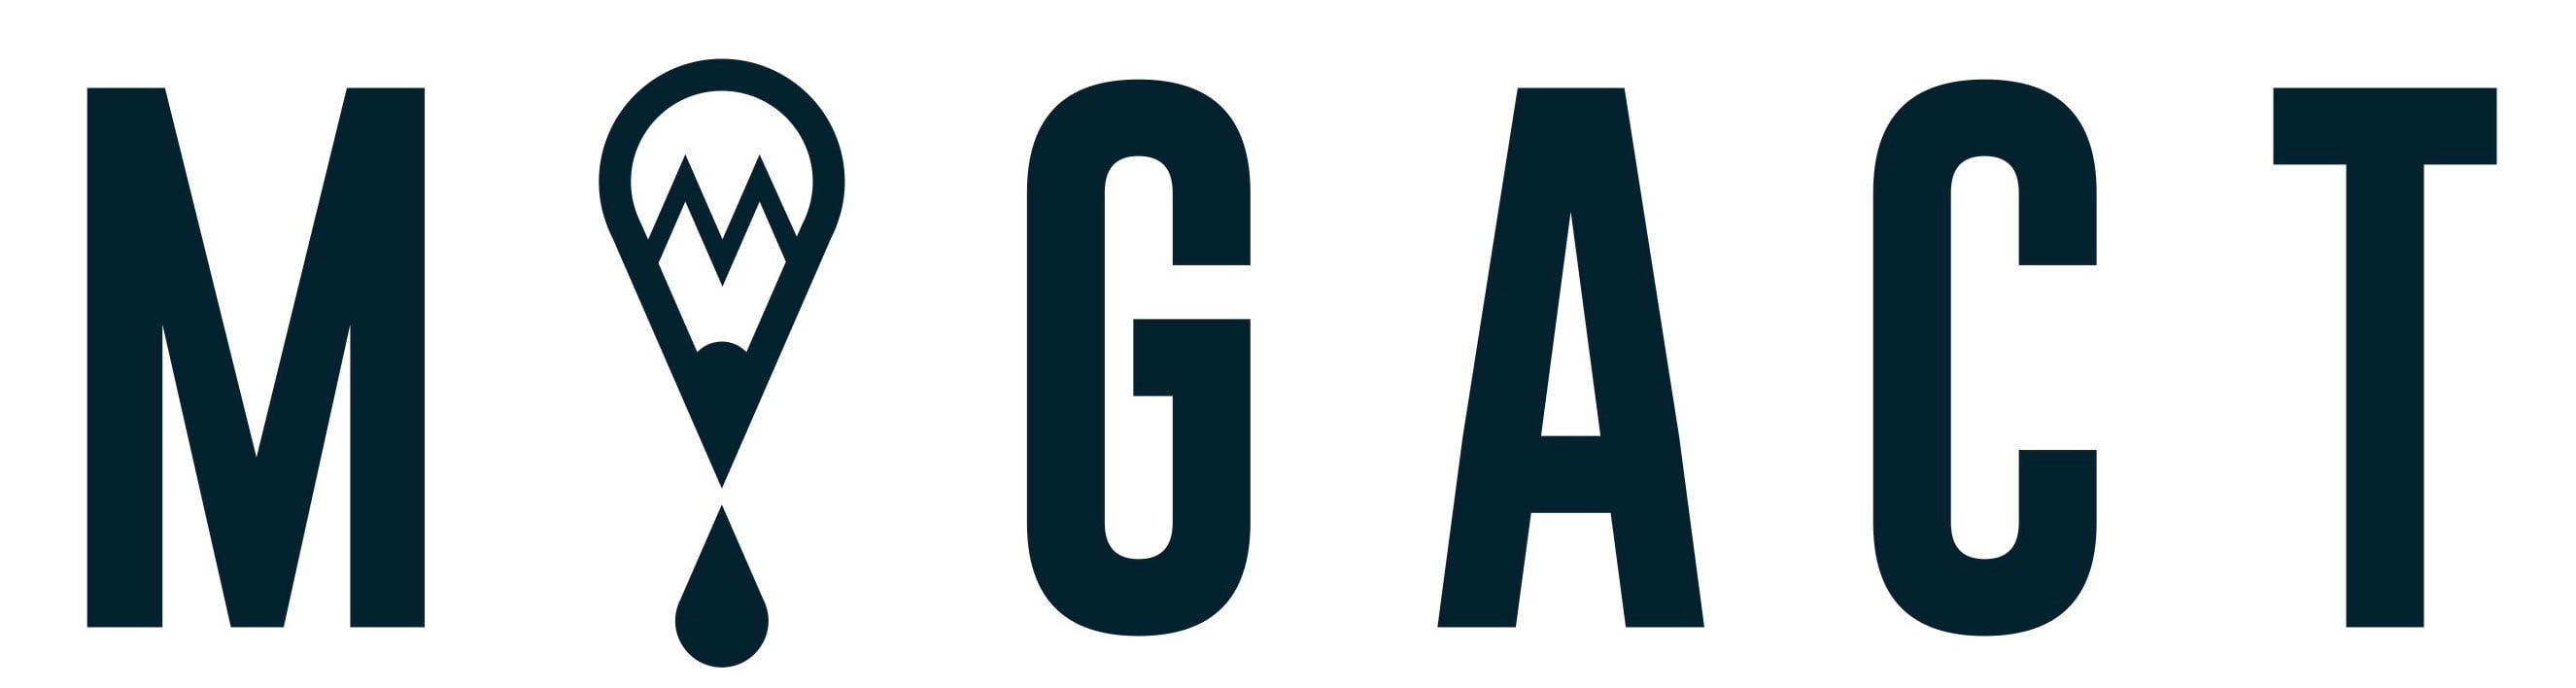 migact-logo